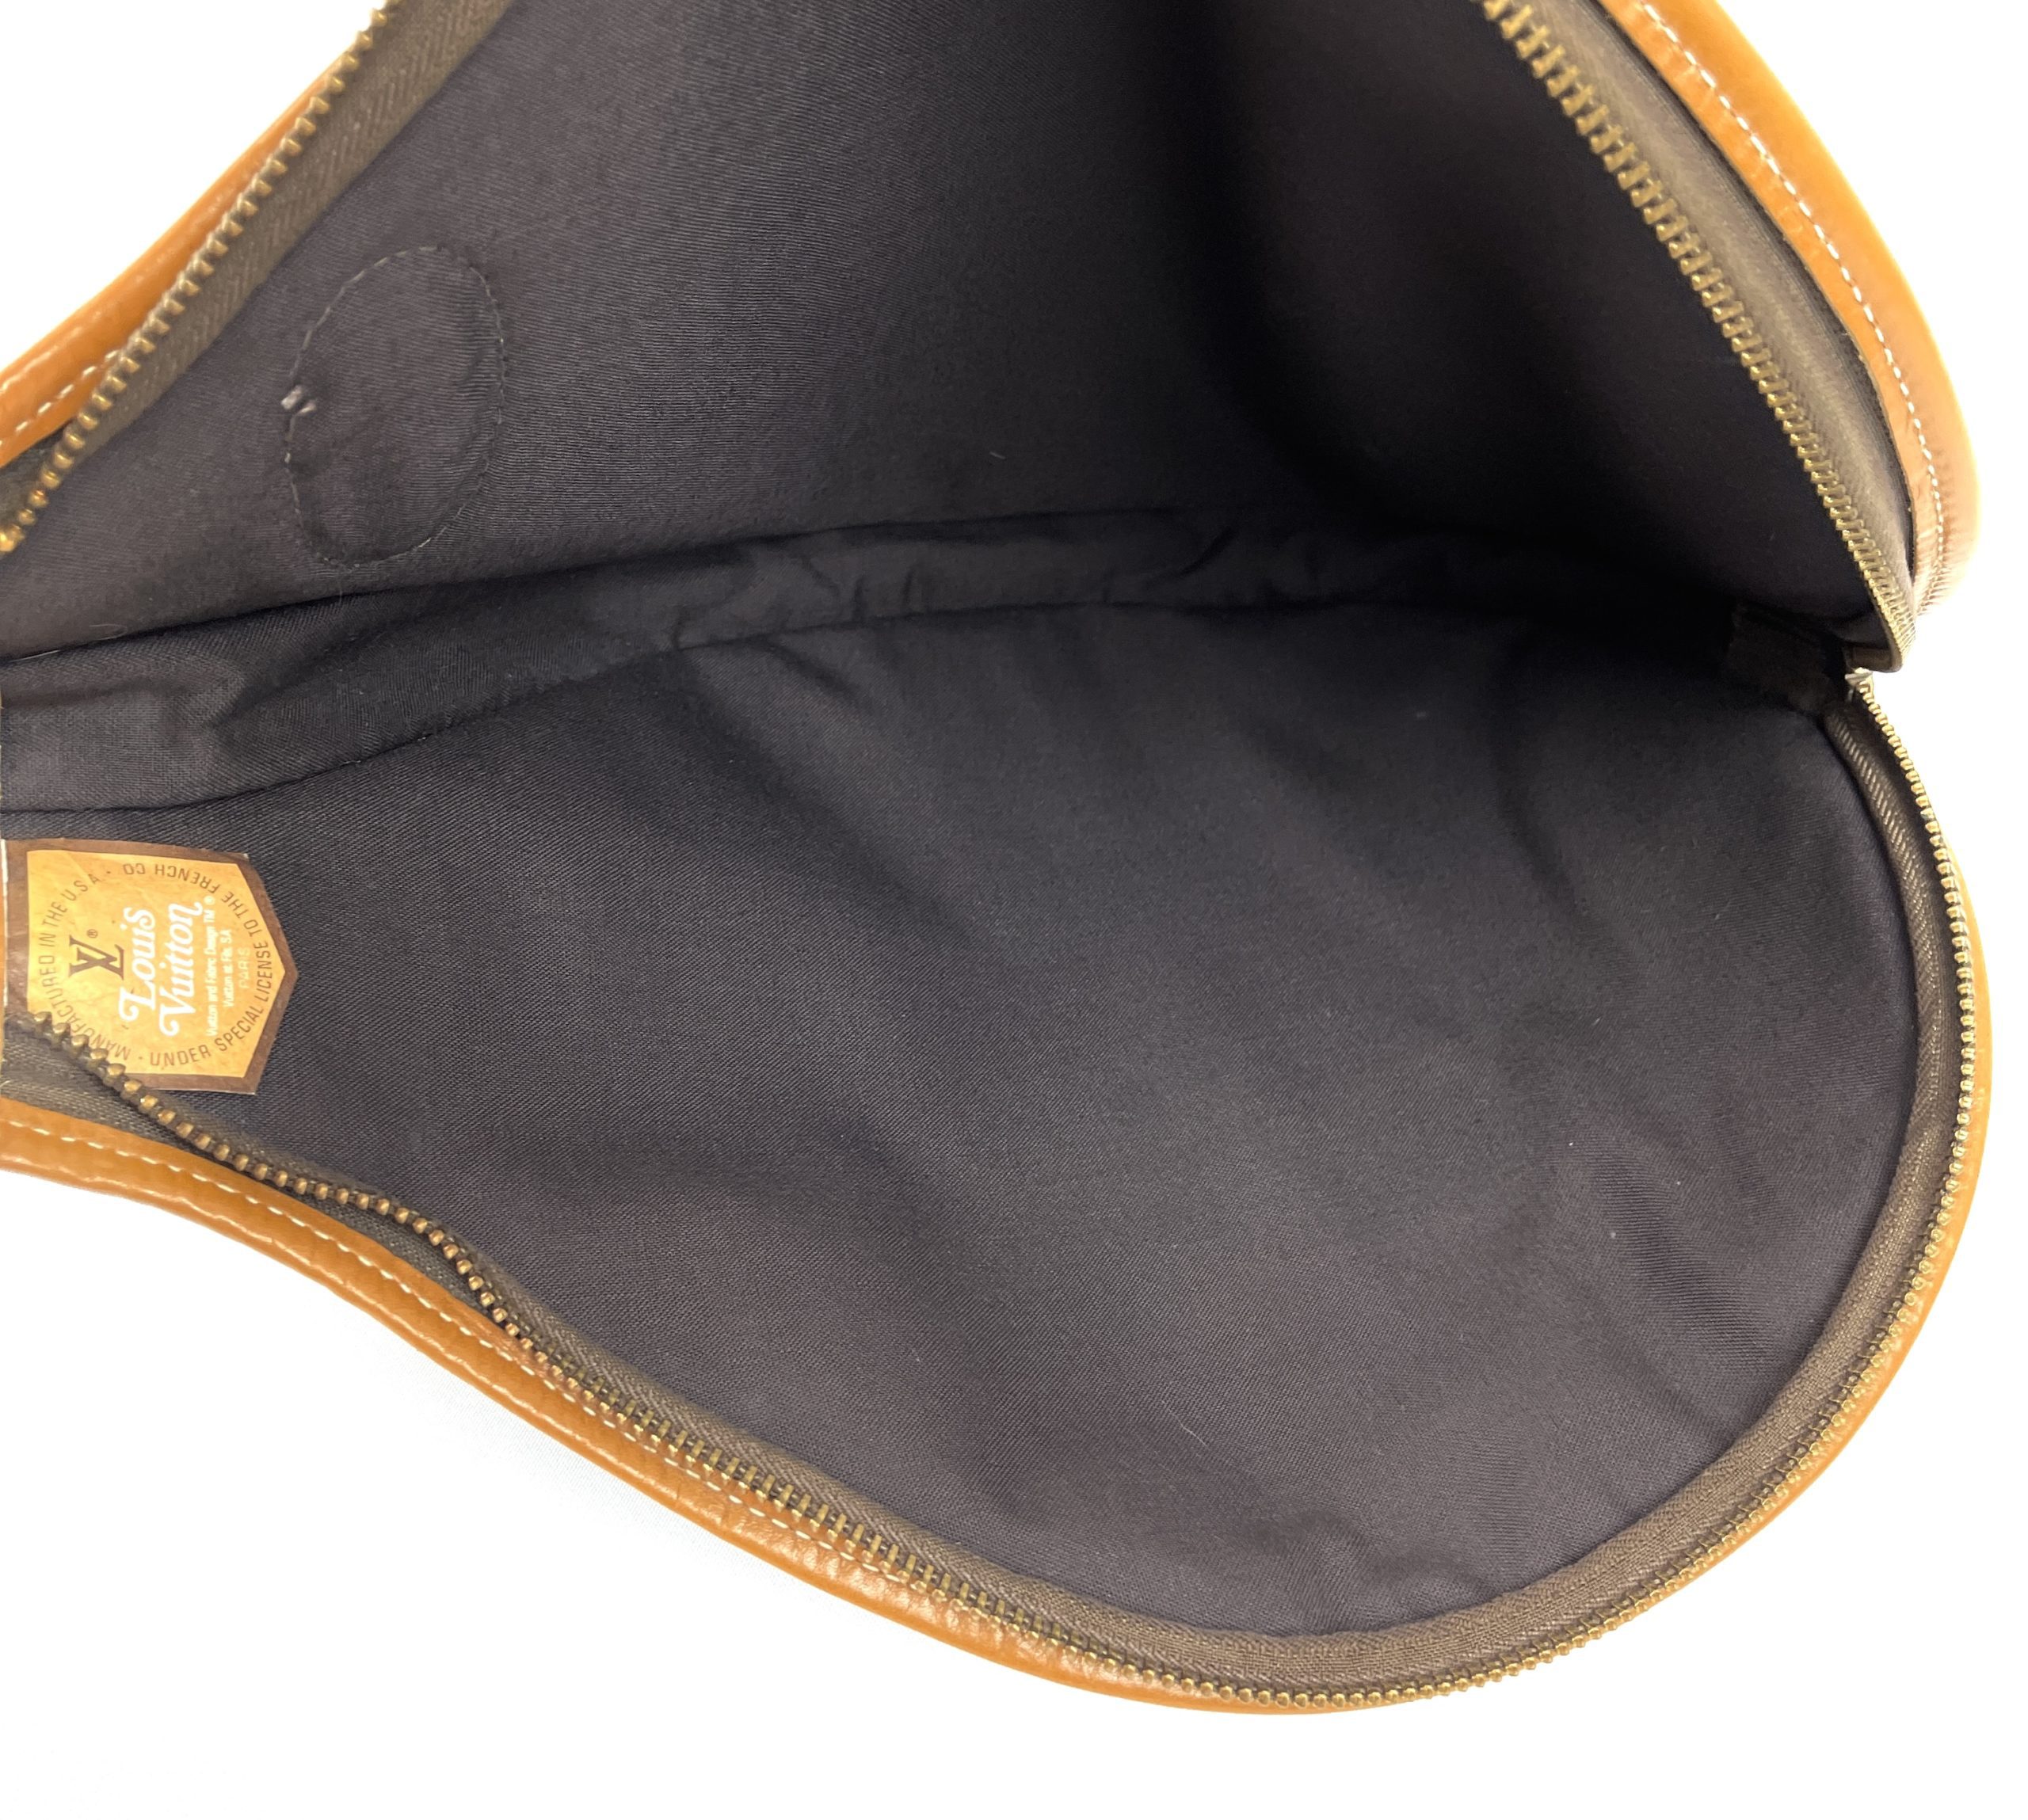 Vintage Louis Vuitton tennis case - Pinth Vintage Luggage